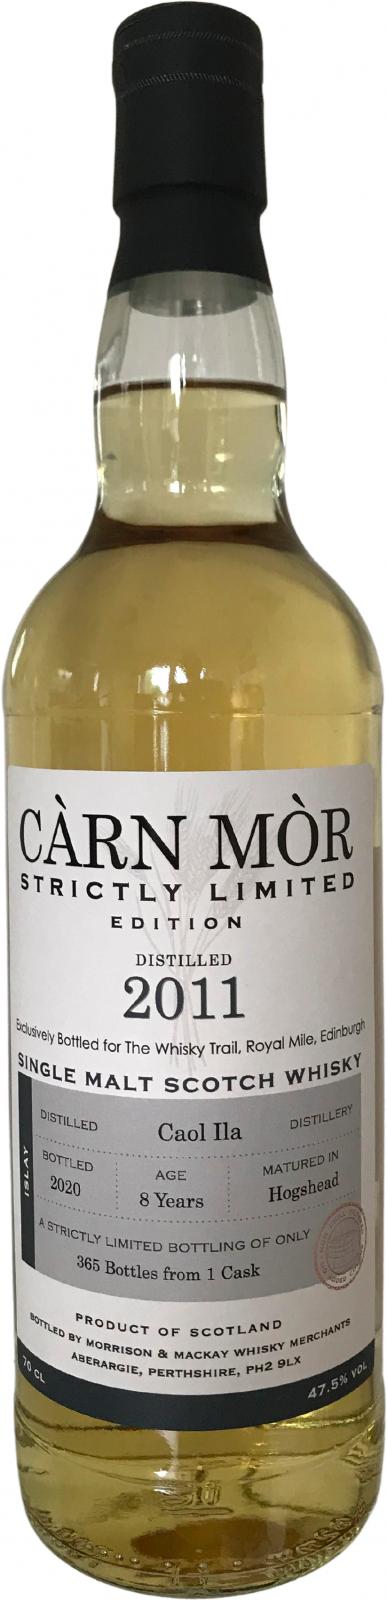 Caol Ila 2011 MMcK Carn Mor Strictly Limited Edition Hogshead The Whisky Trail Royal Mile Edinburgh 47.5% 700ml